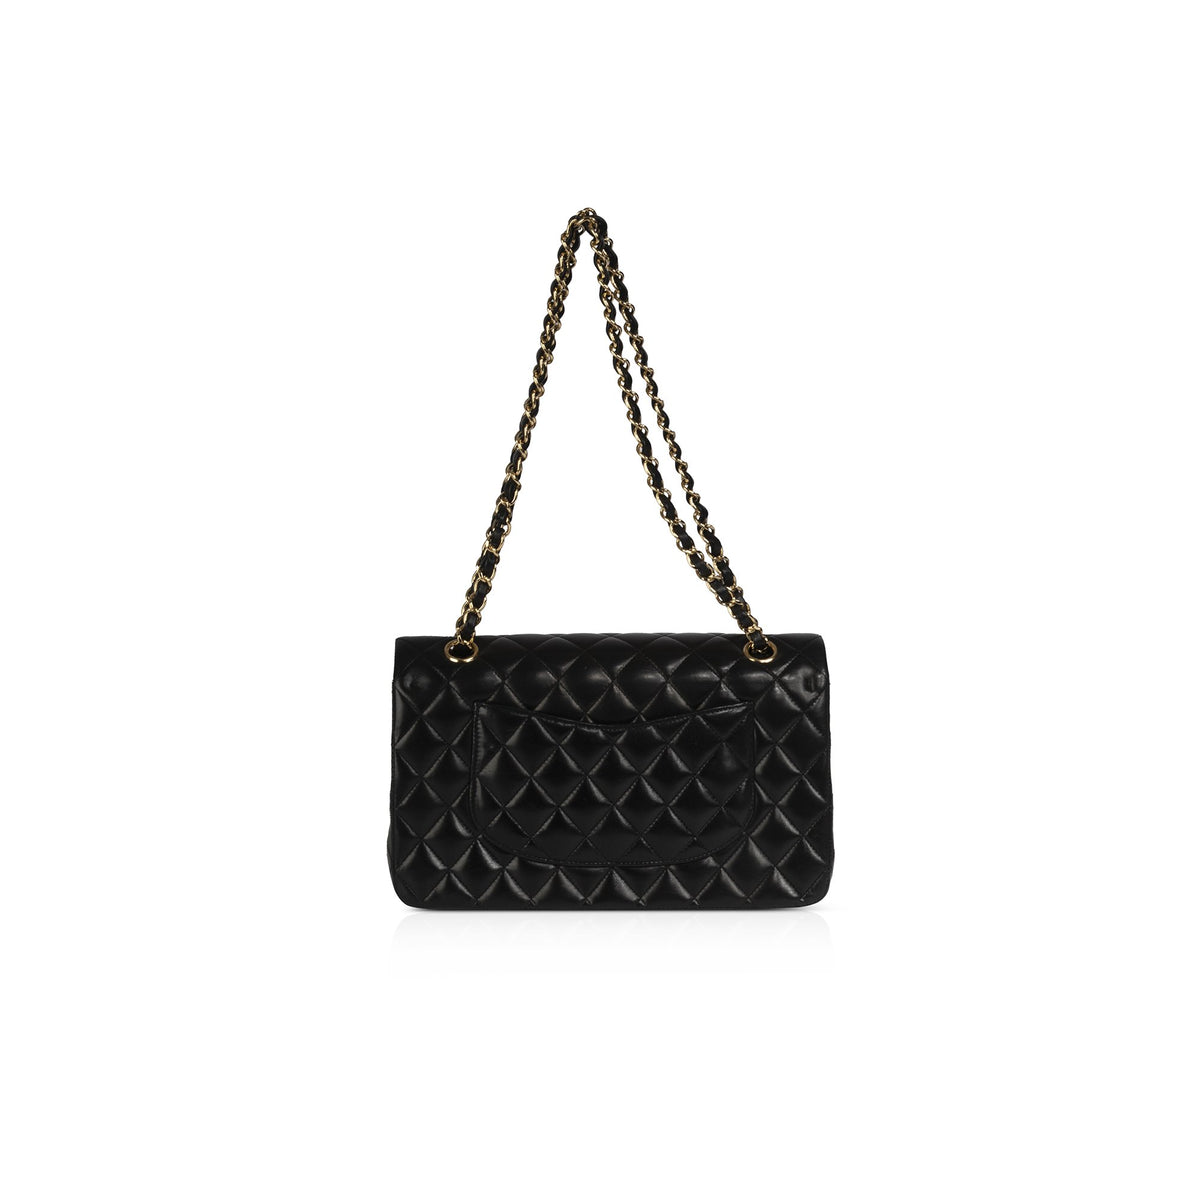 Explore our extensive assortment of Chanel Black Lambskin Medium